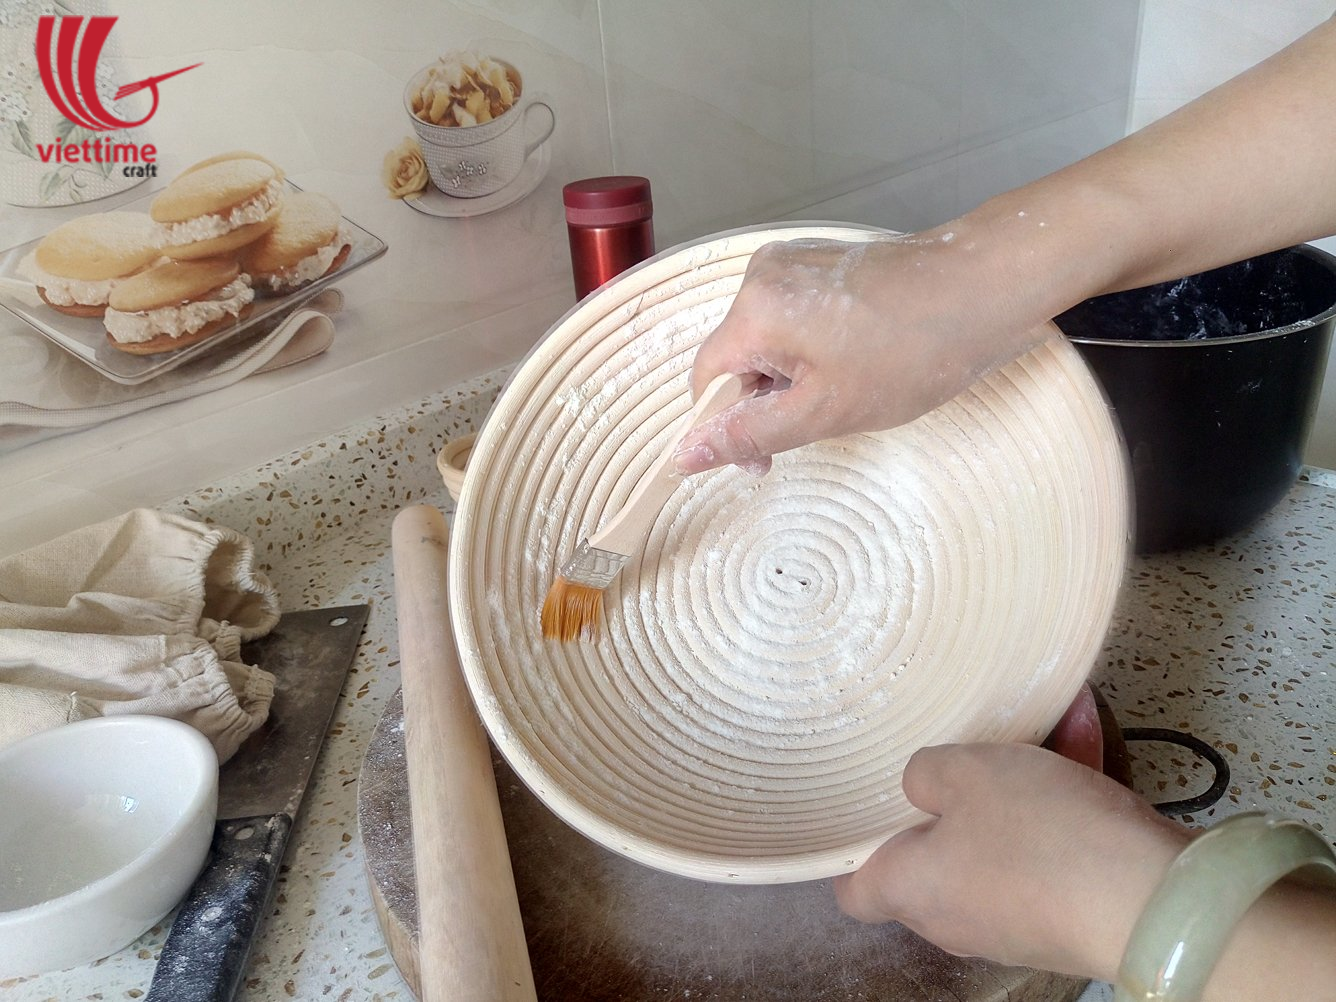 18 * 9cm ANGGREK Bread Basket 8 Inch Round Proofing Basket for Bread Baking Dough Rising Rattan Basket